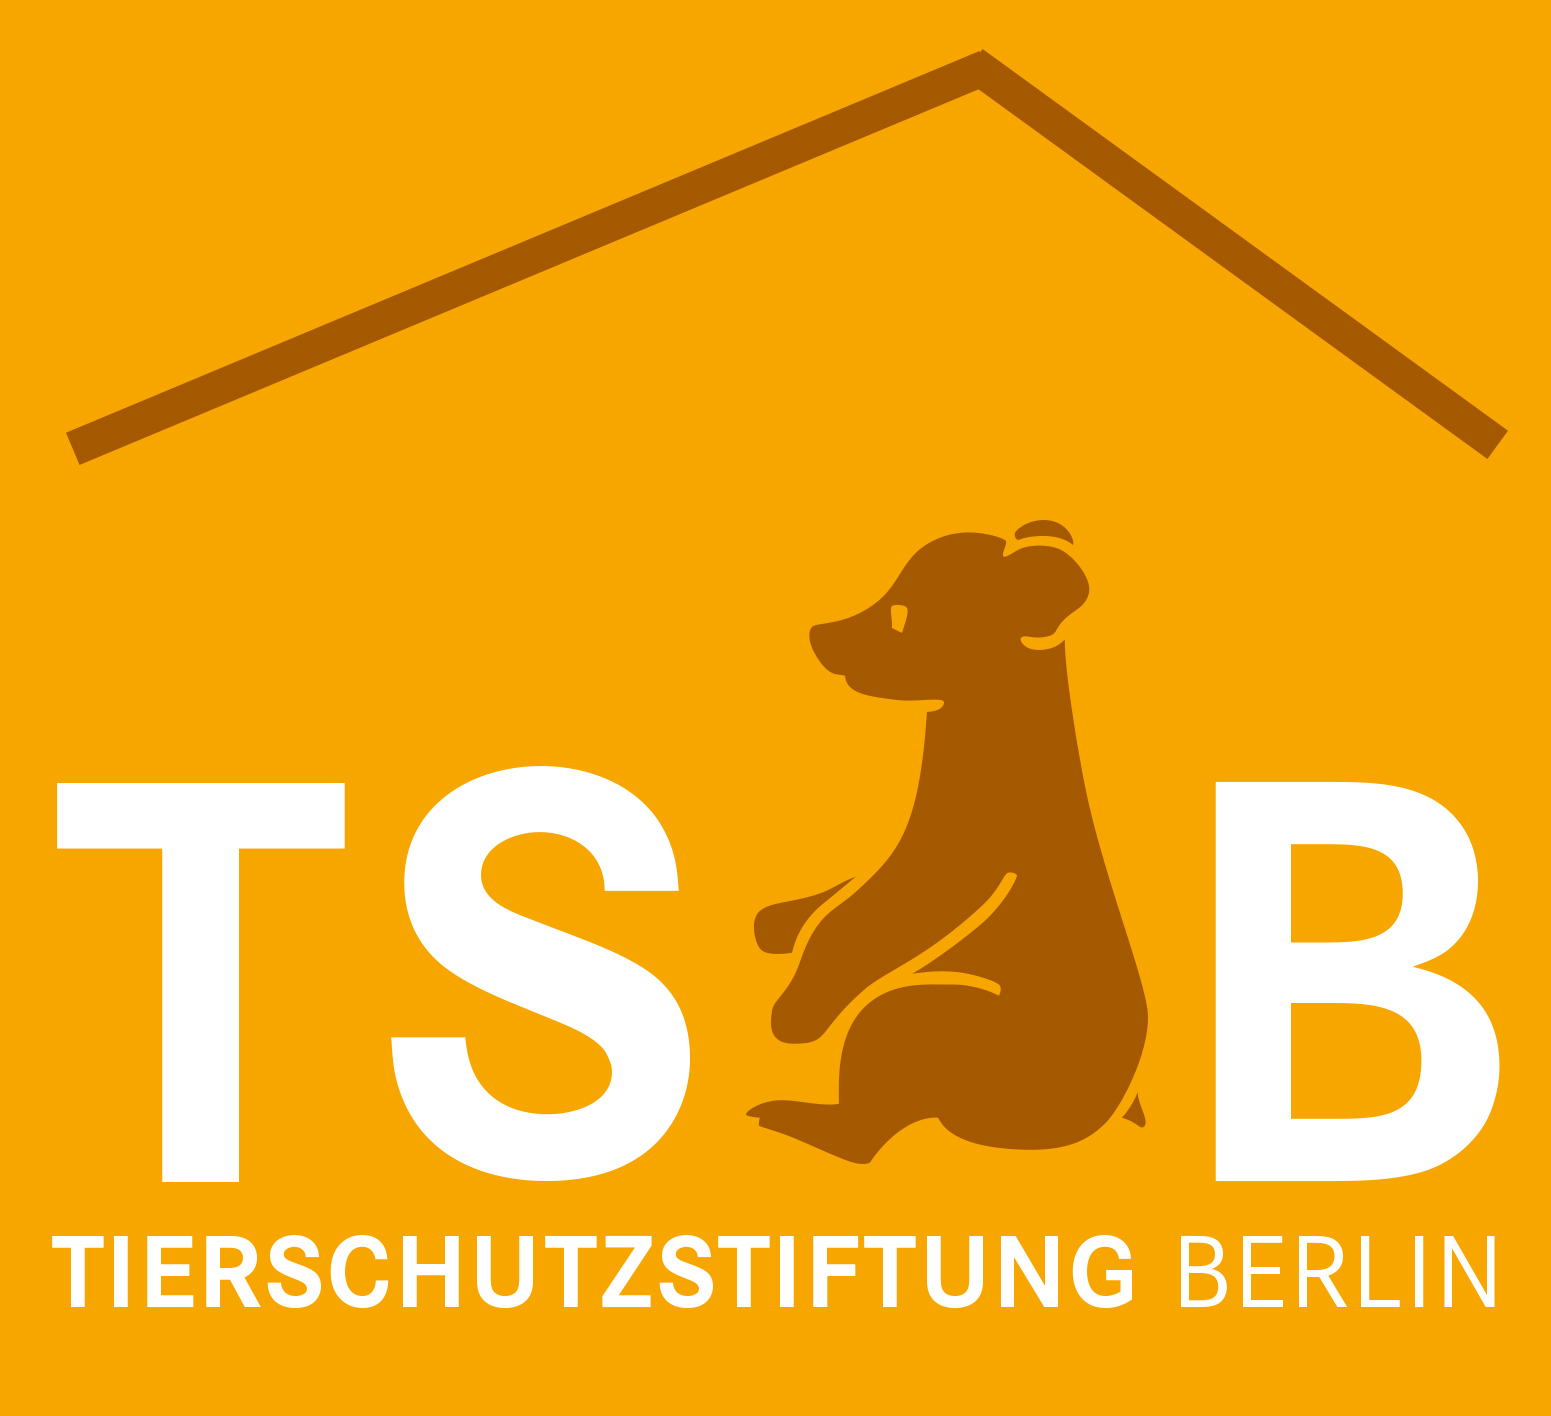 (c) Tierschutzstiftung-berlin.de